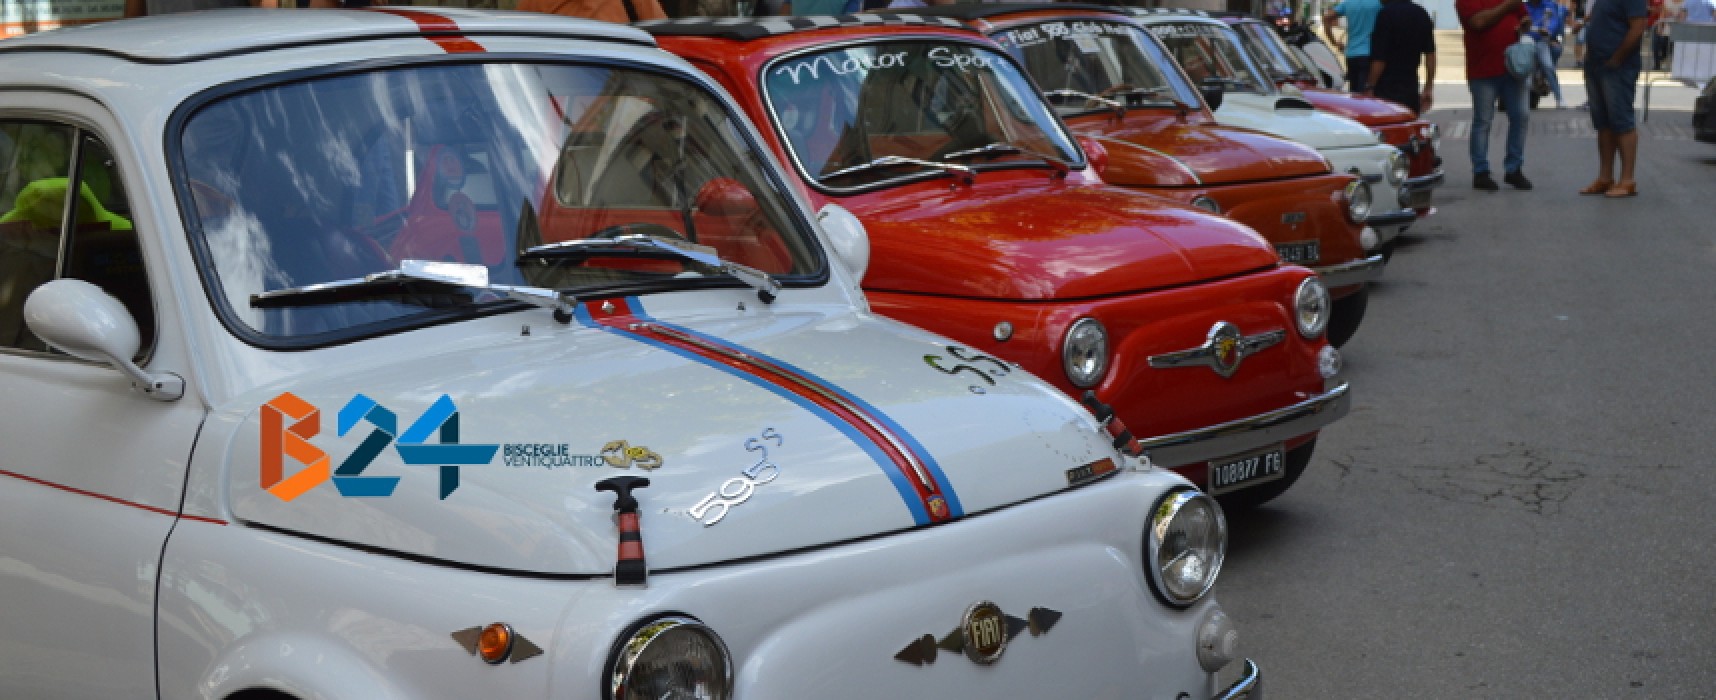 Fiat 500 club, Meeting internazionale del Sud Italia nel weekend